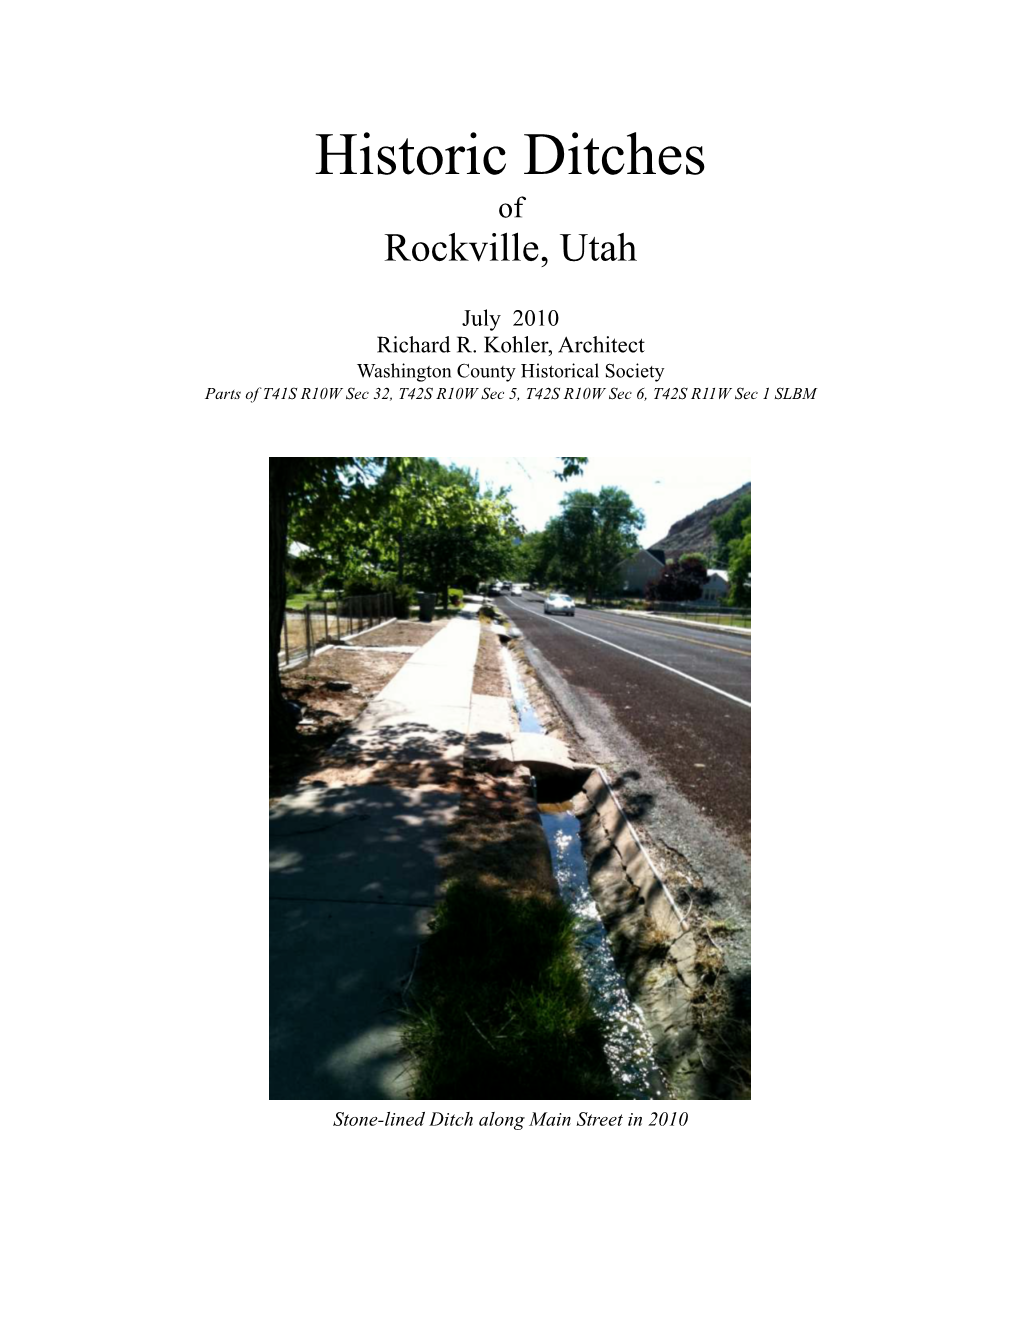 Historic Ditches of Rockville, Utah